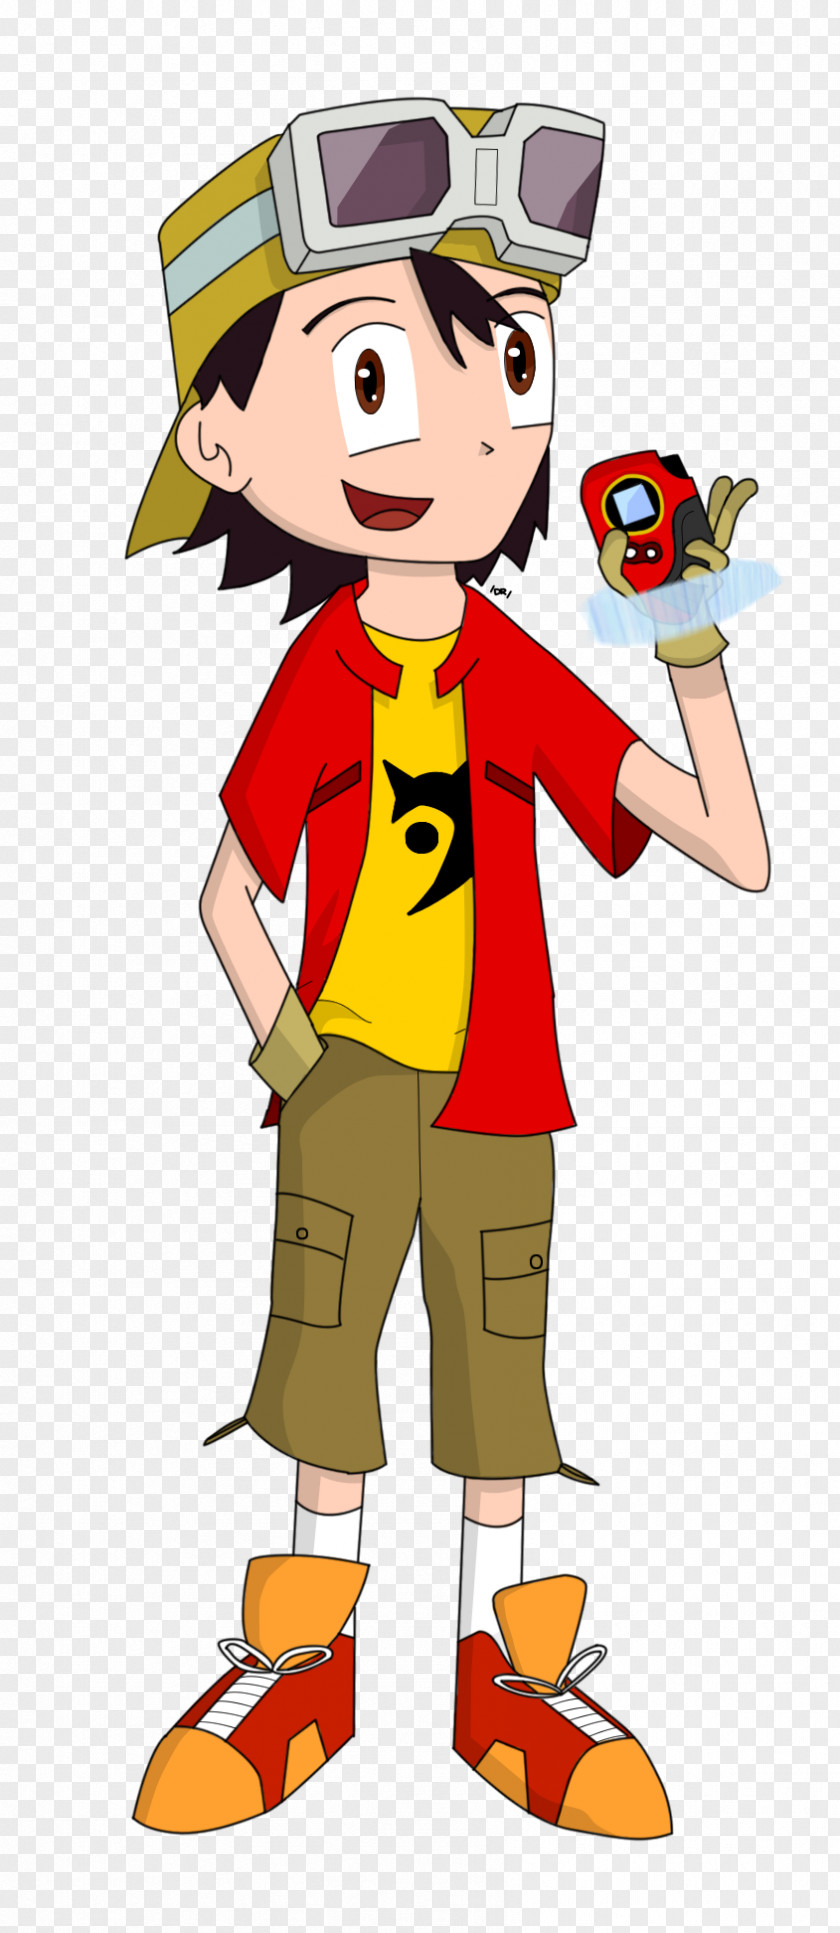 Digimon Takuya Kanbara DigiDestined Character PNG